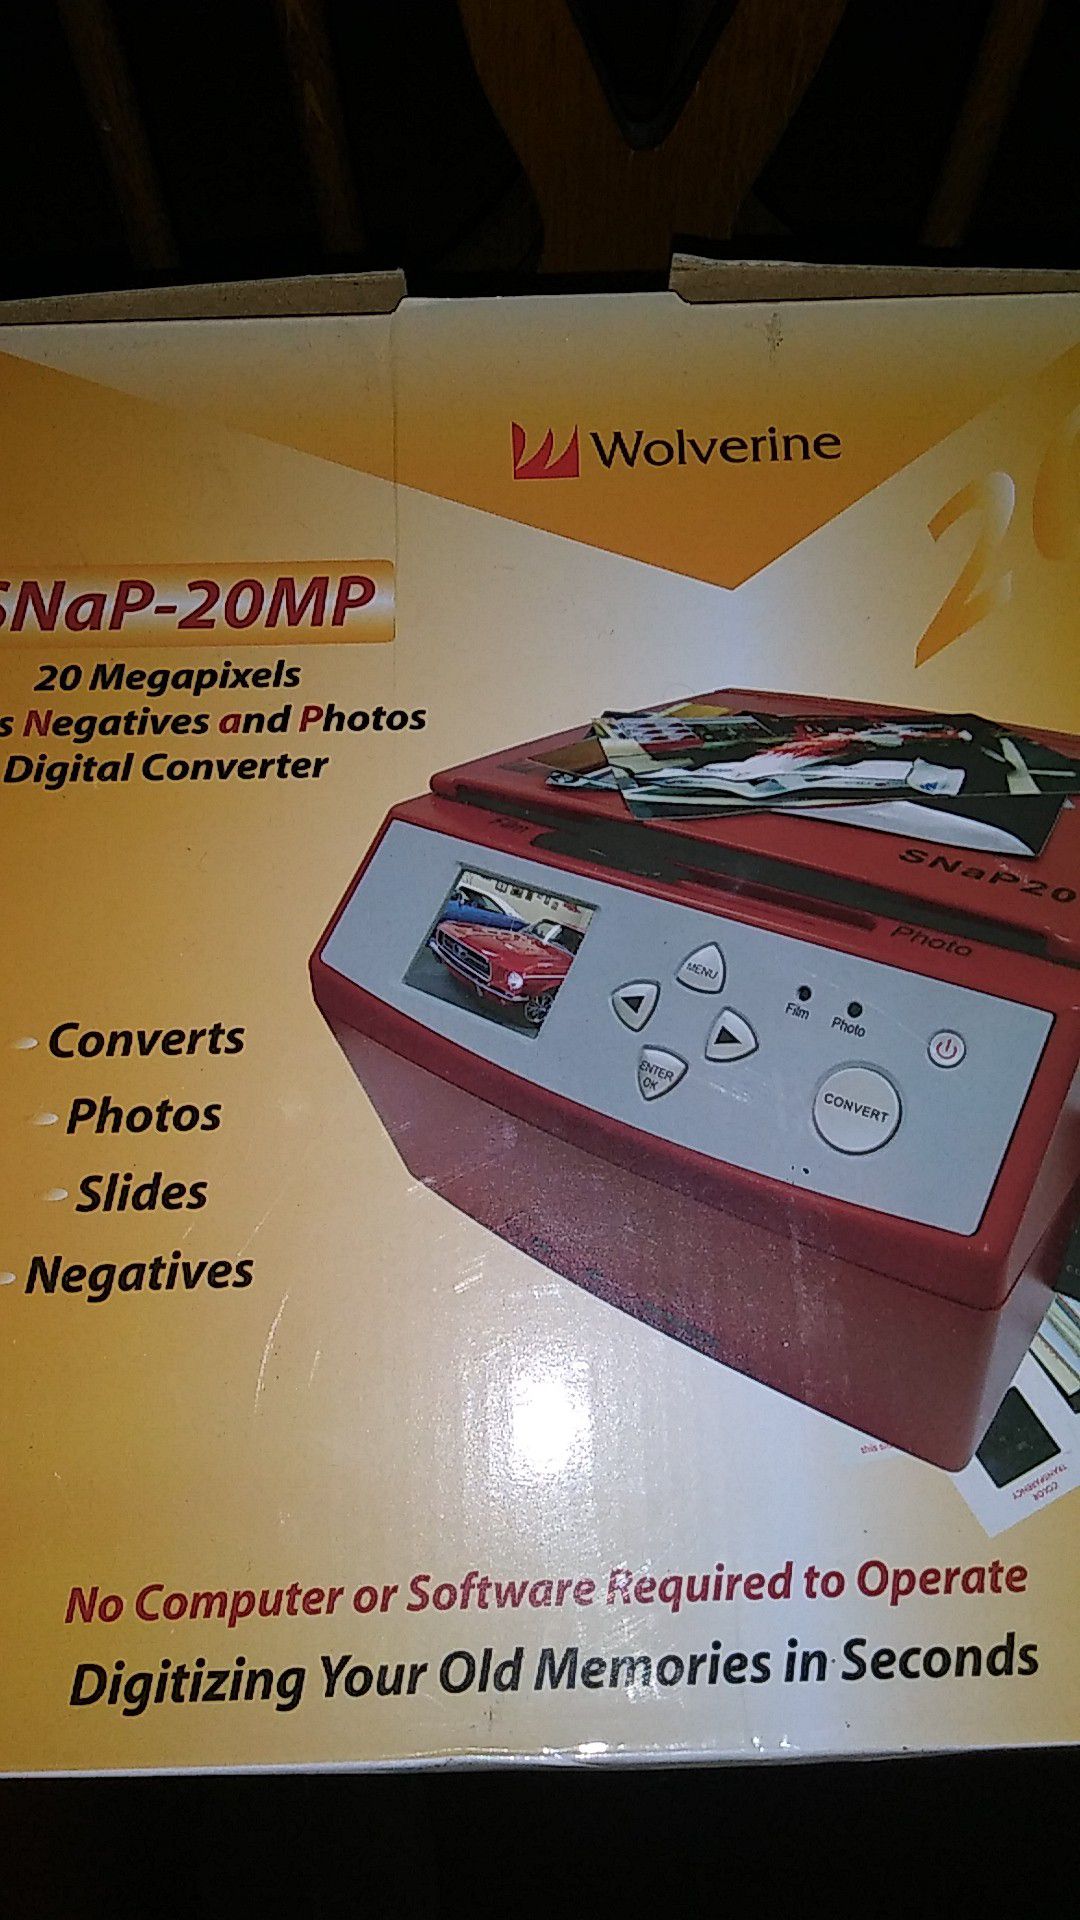 Photo and digital converter